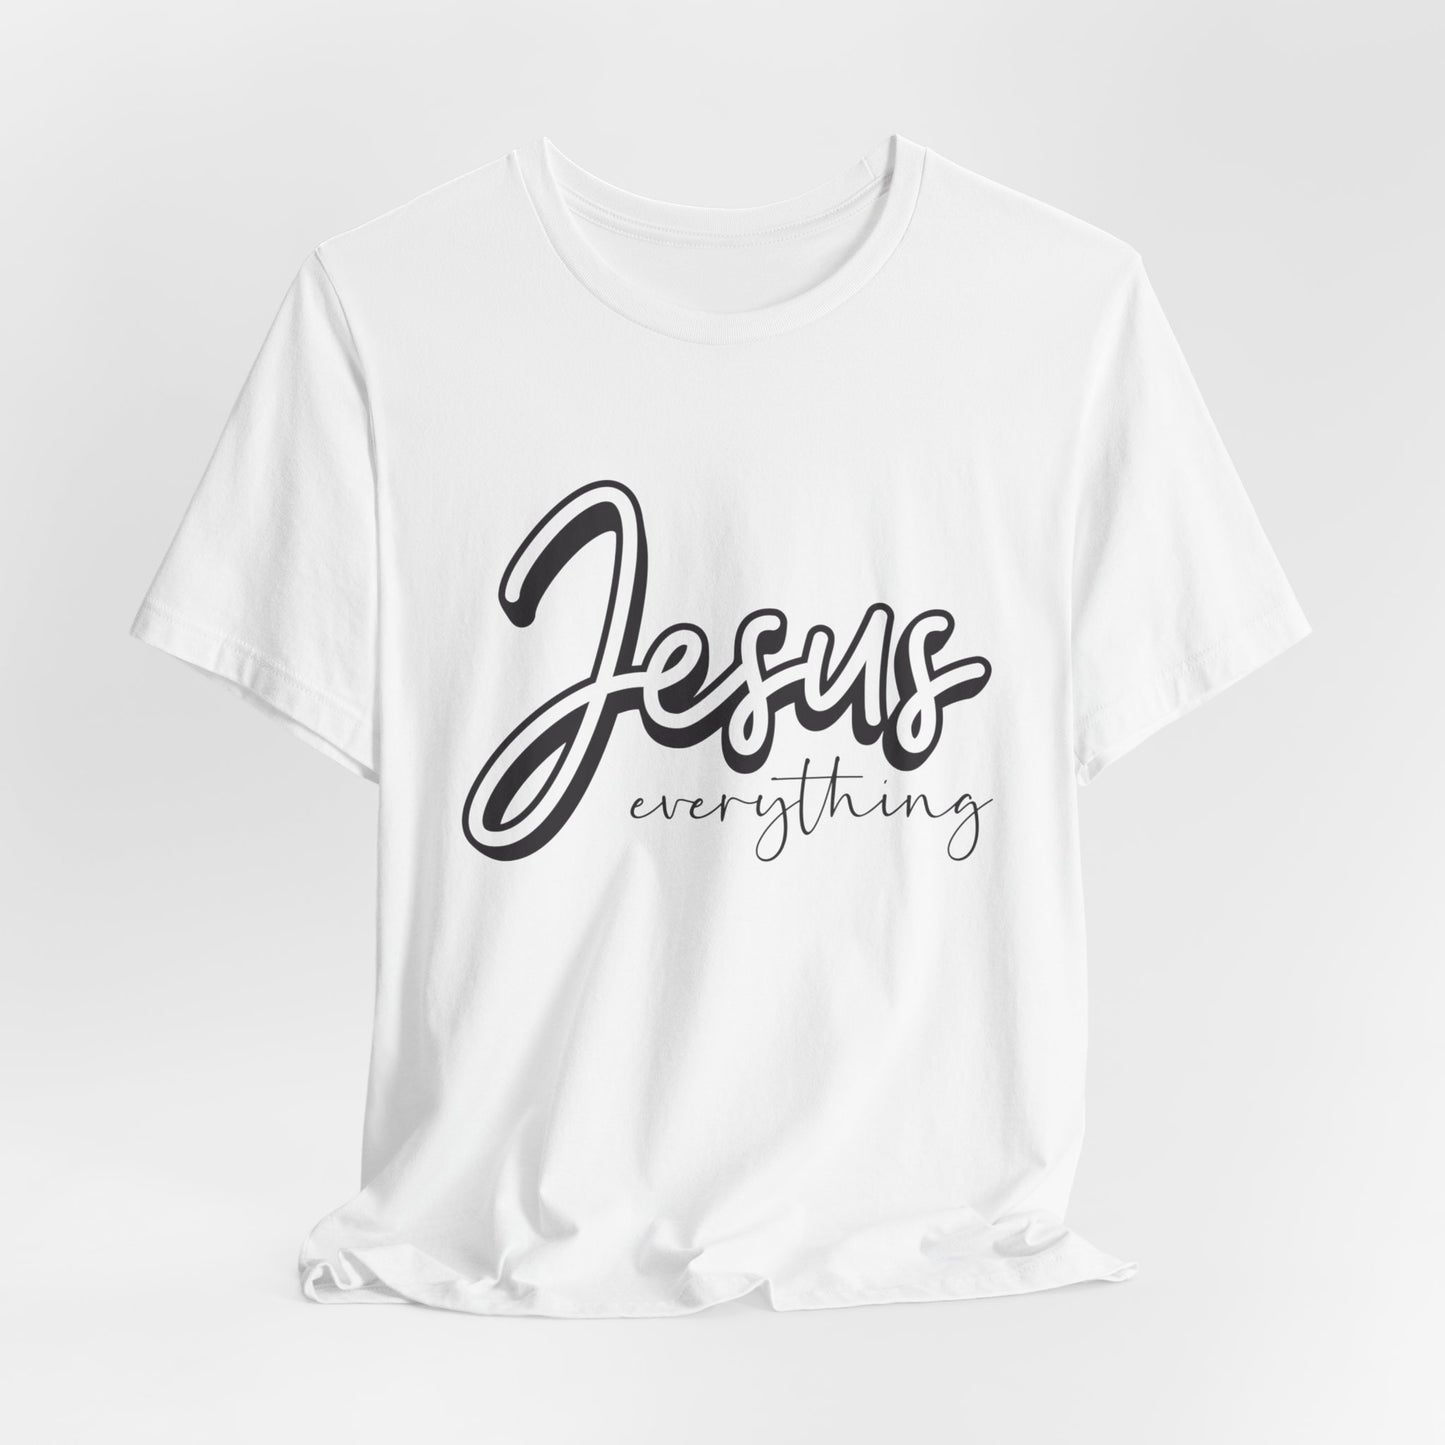 Jesus Over Everything Shirt